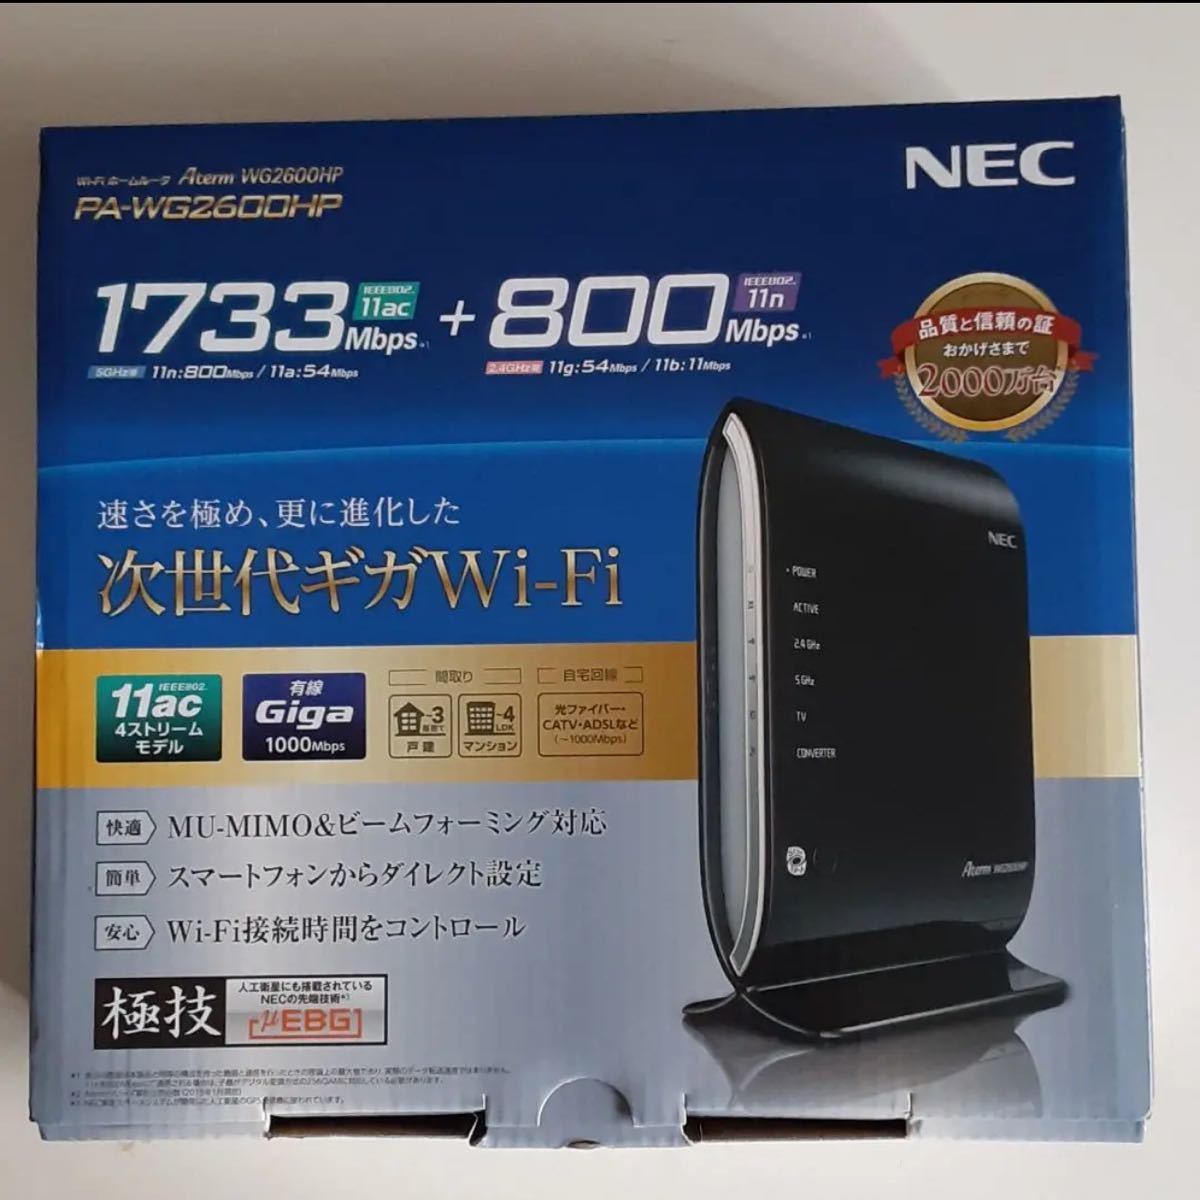 NEC Aterm WG2600HP ルーター